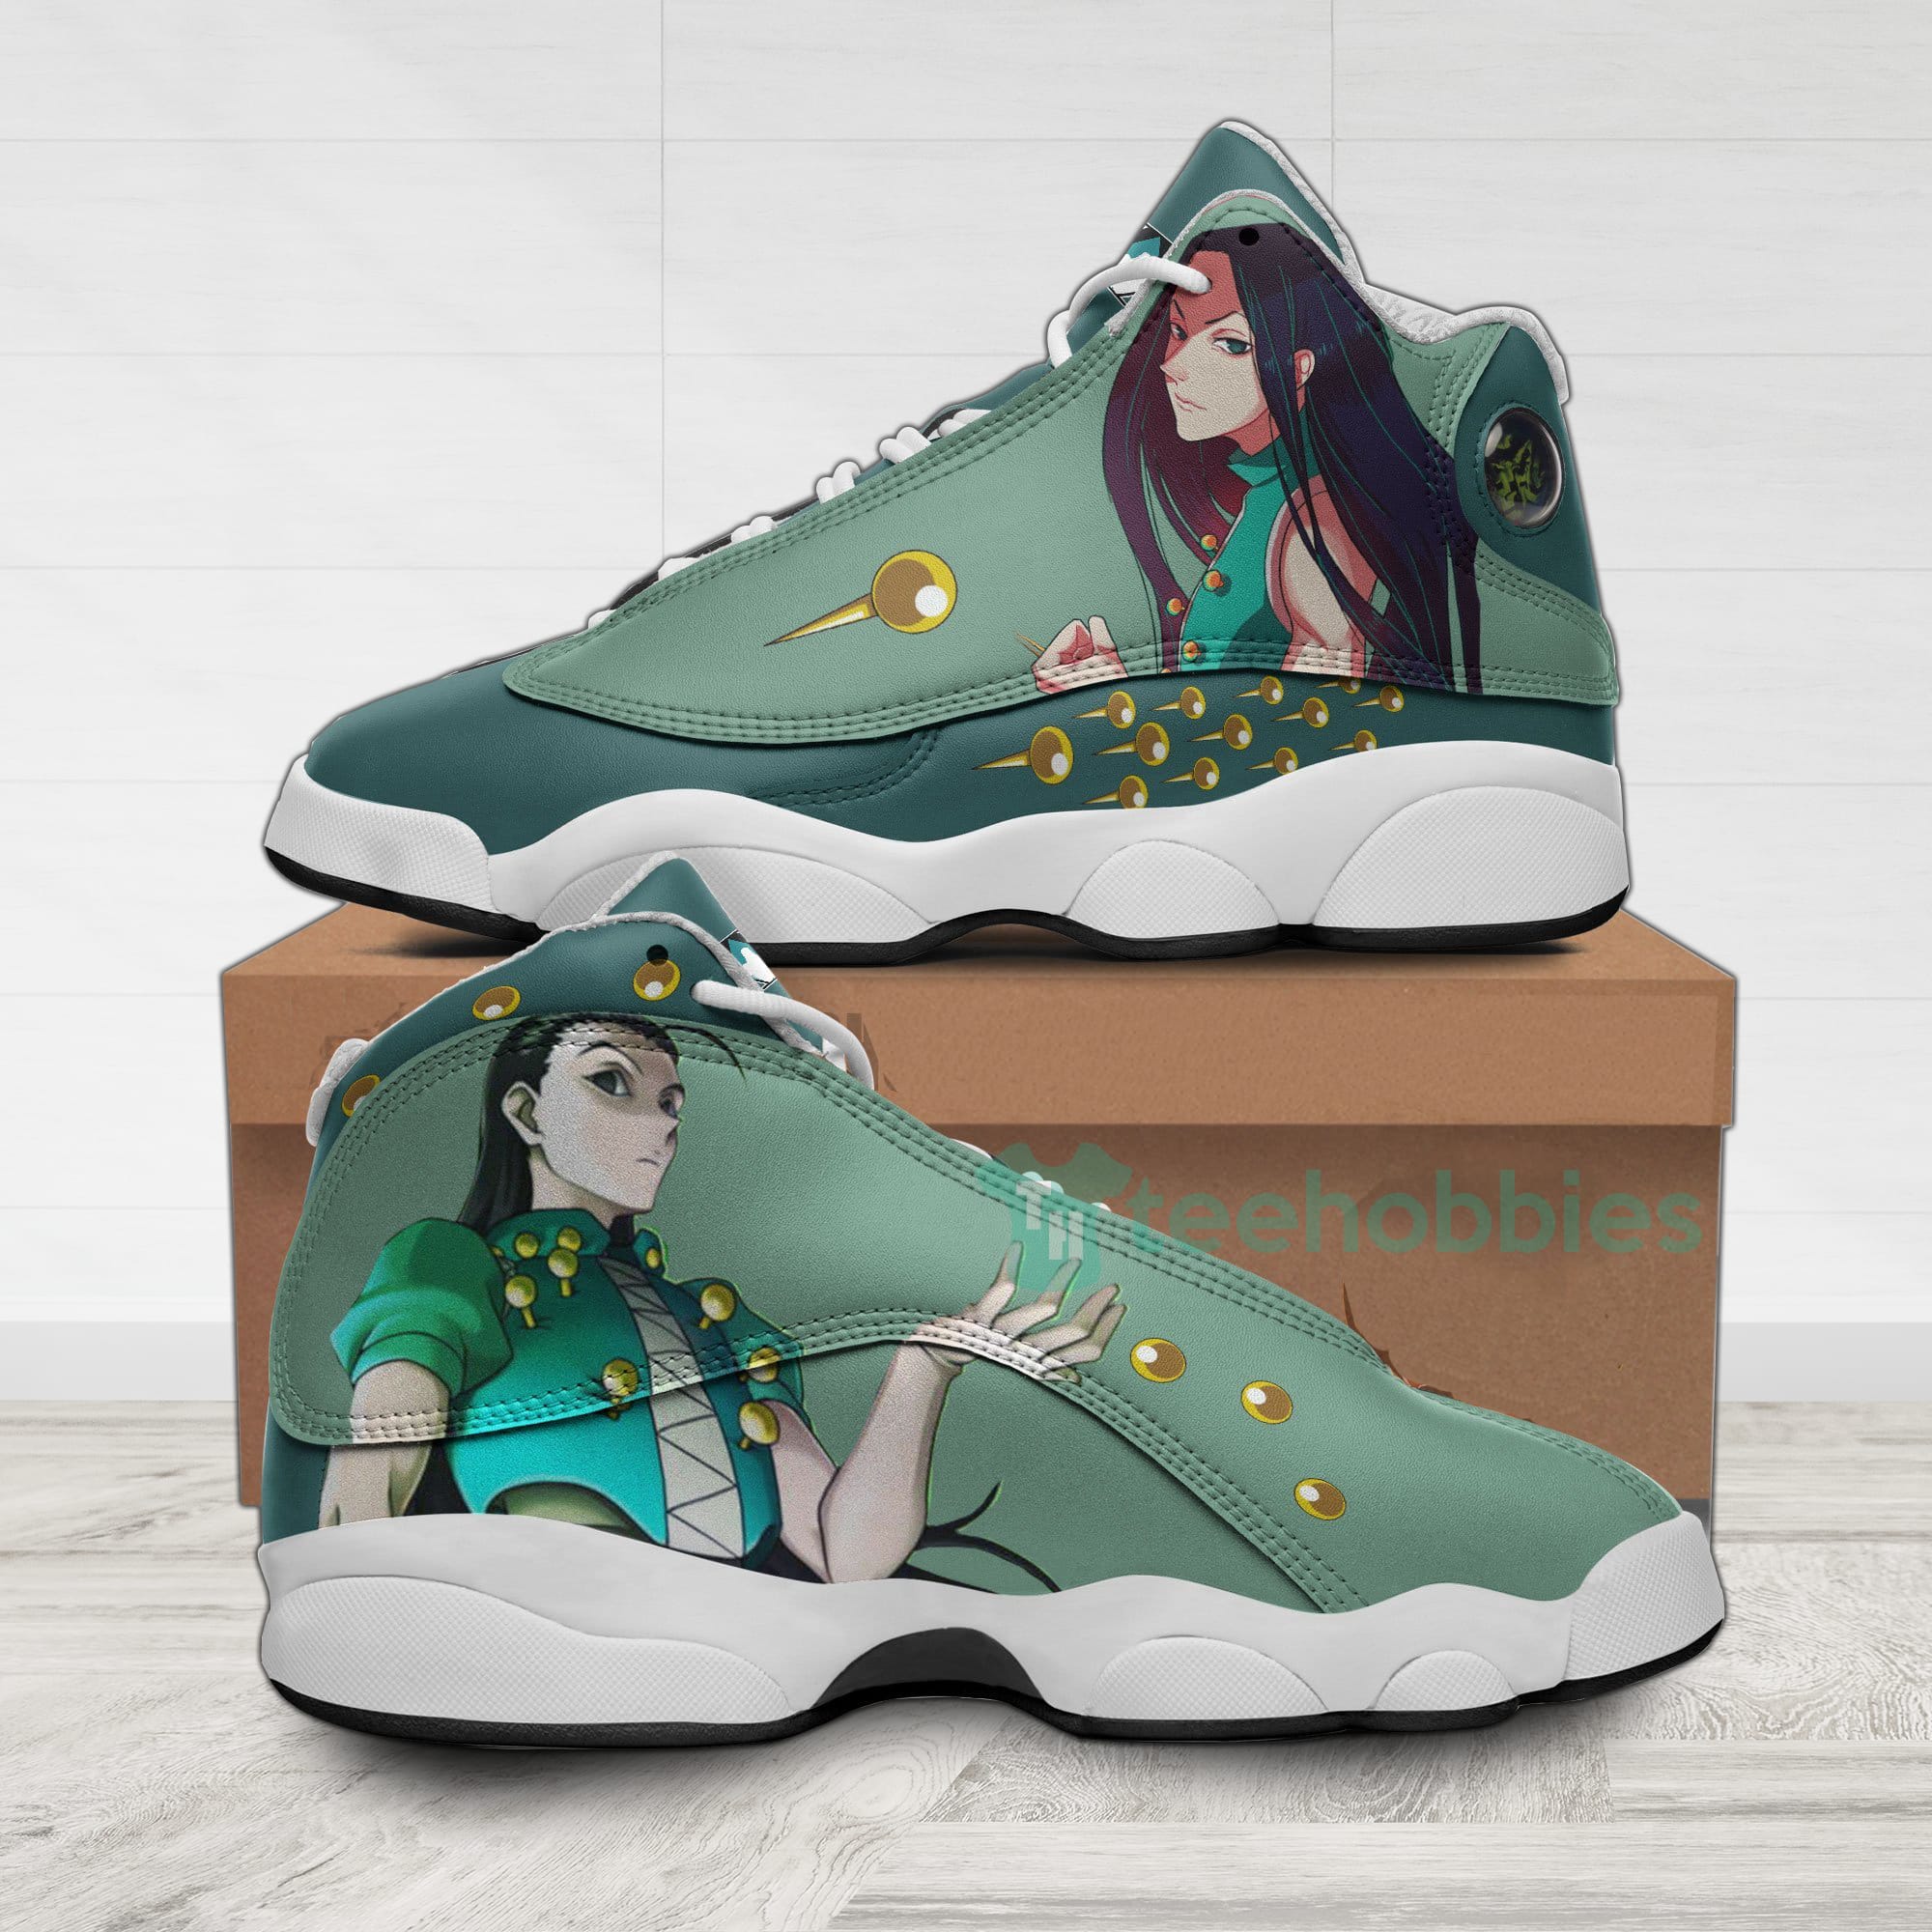 Illumi Zoldyck Custom Hunter Anime Air Jordan 13 Shoes Product photo 1